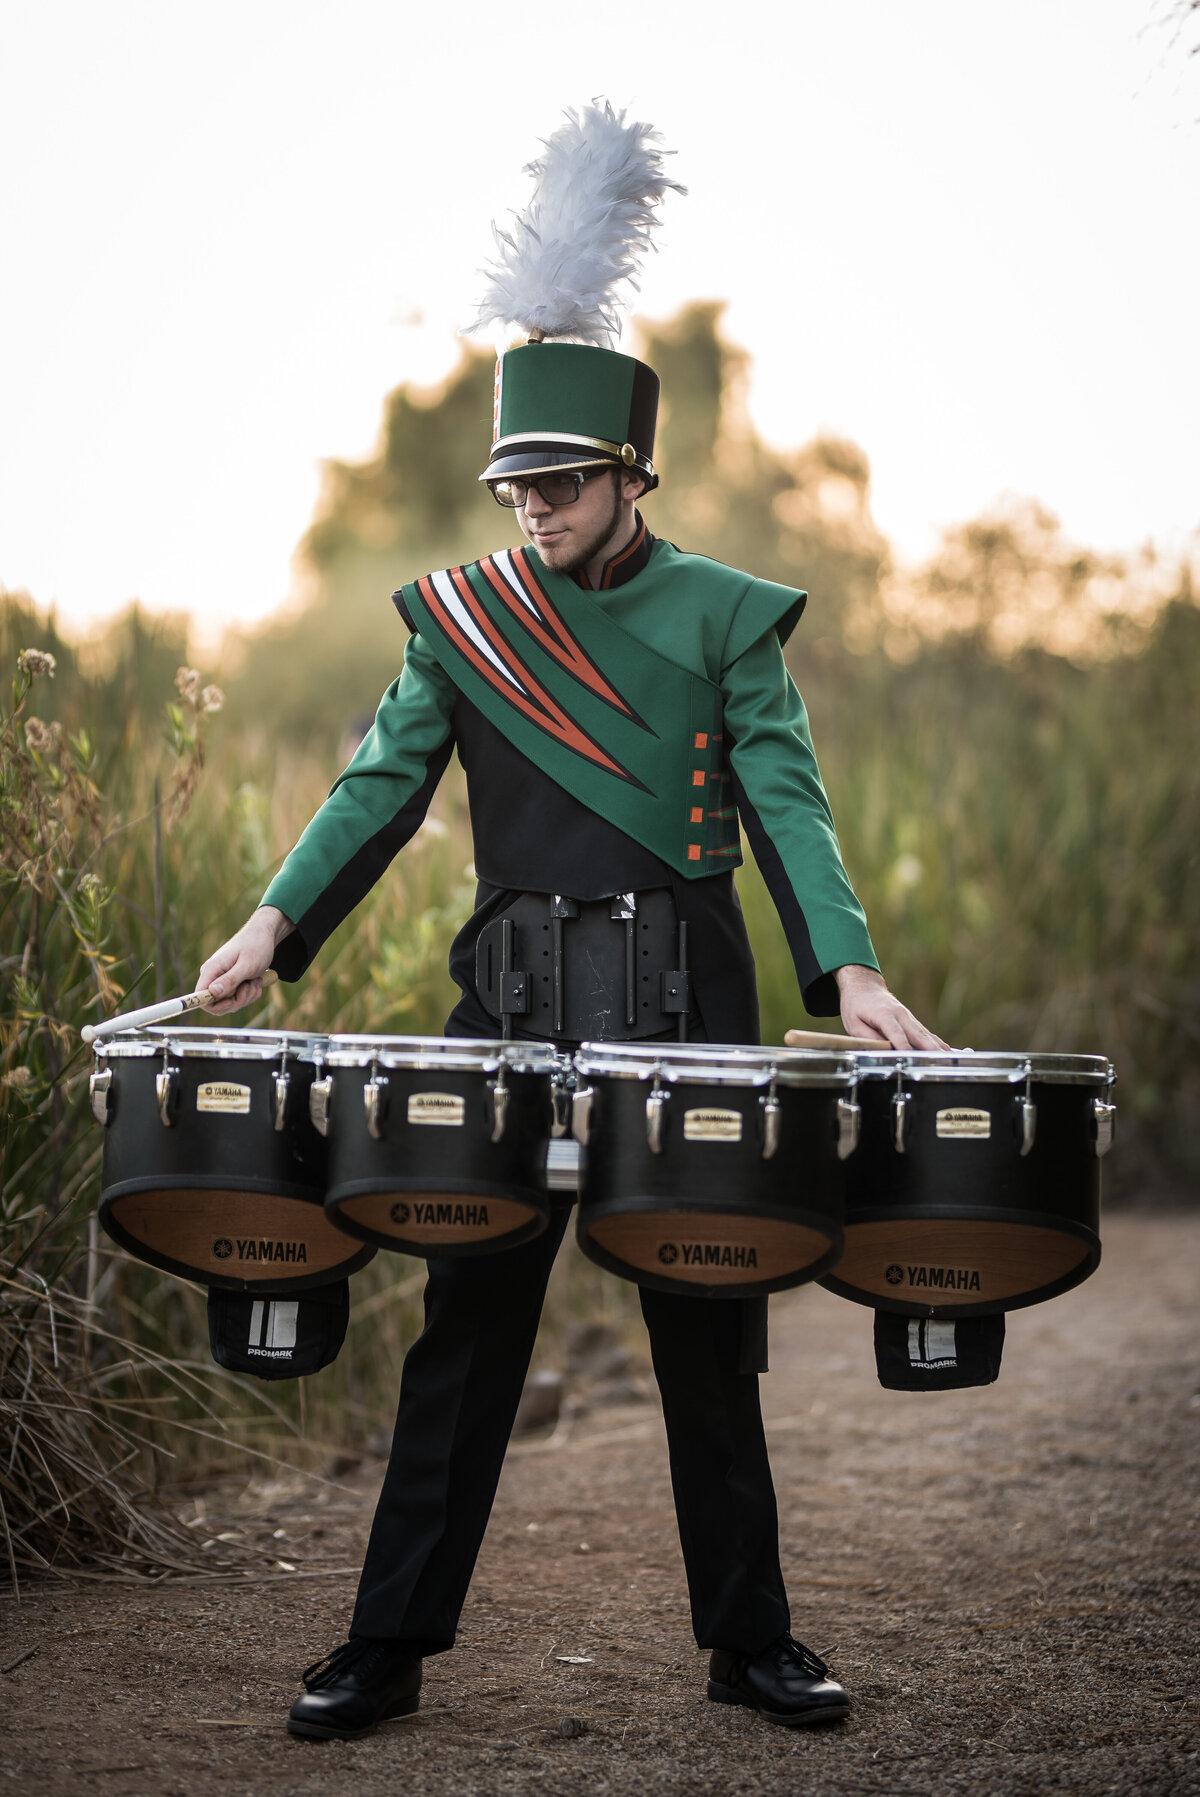 High School Senior in band uniform with drum set